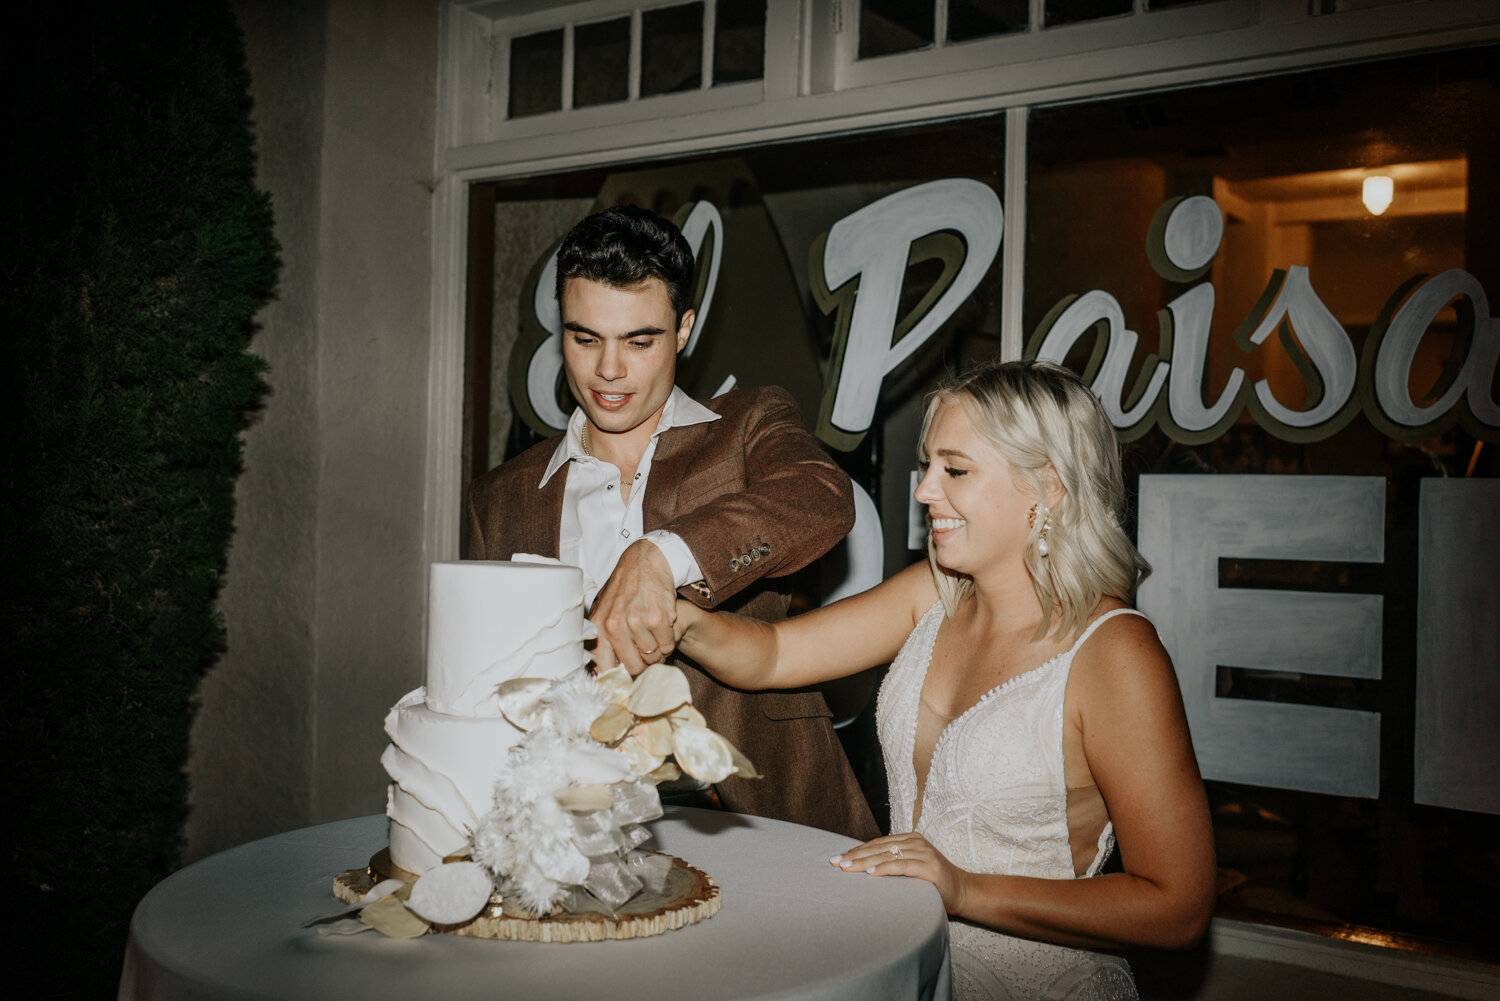 Marfa, Texas Cake Cutting at Intimate Wedding